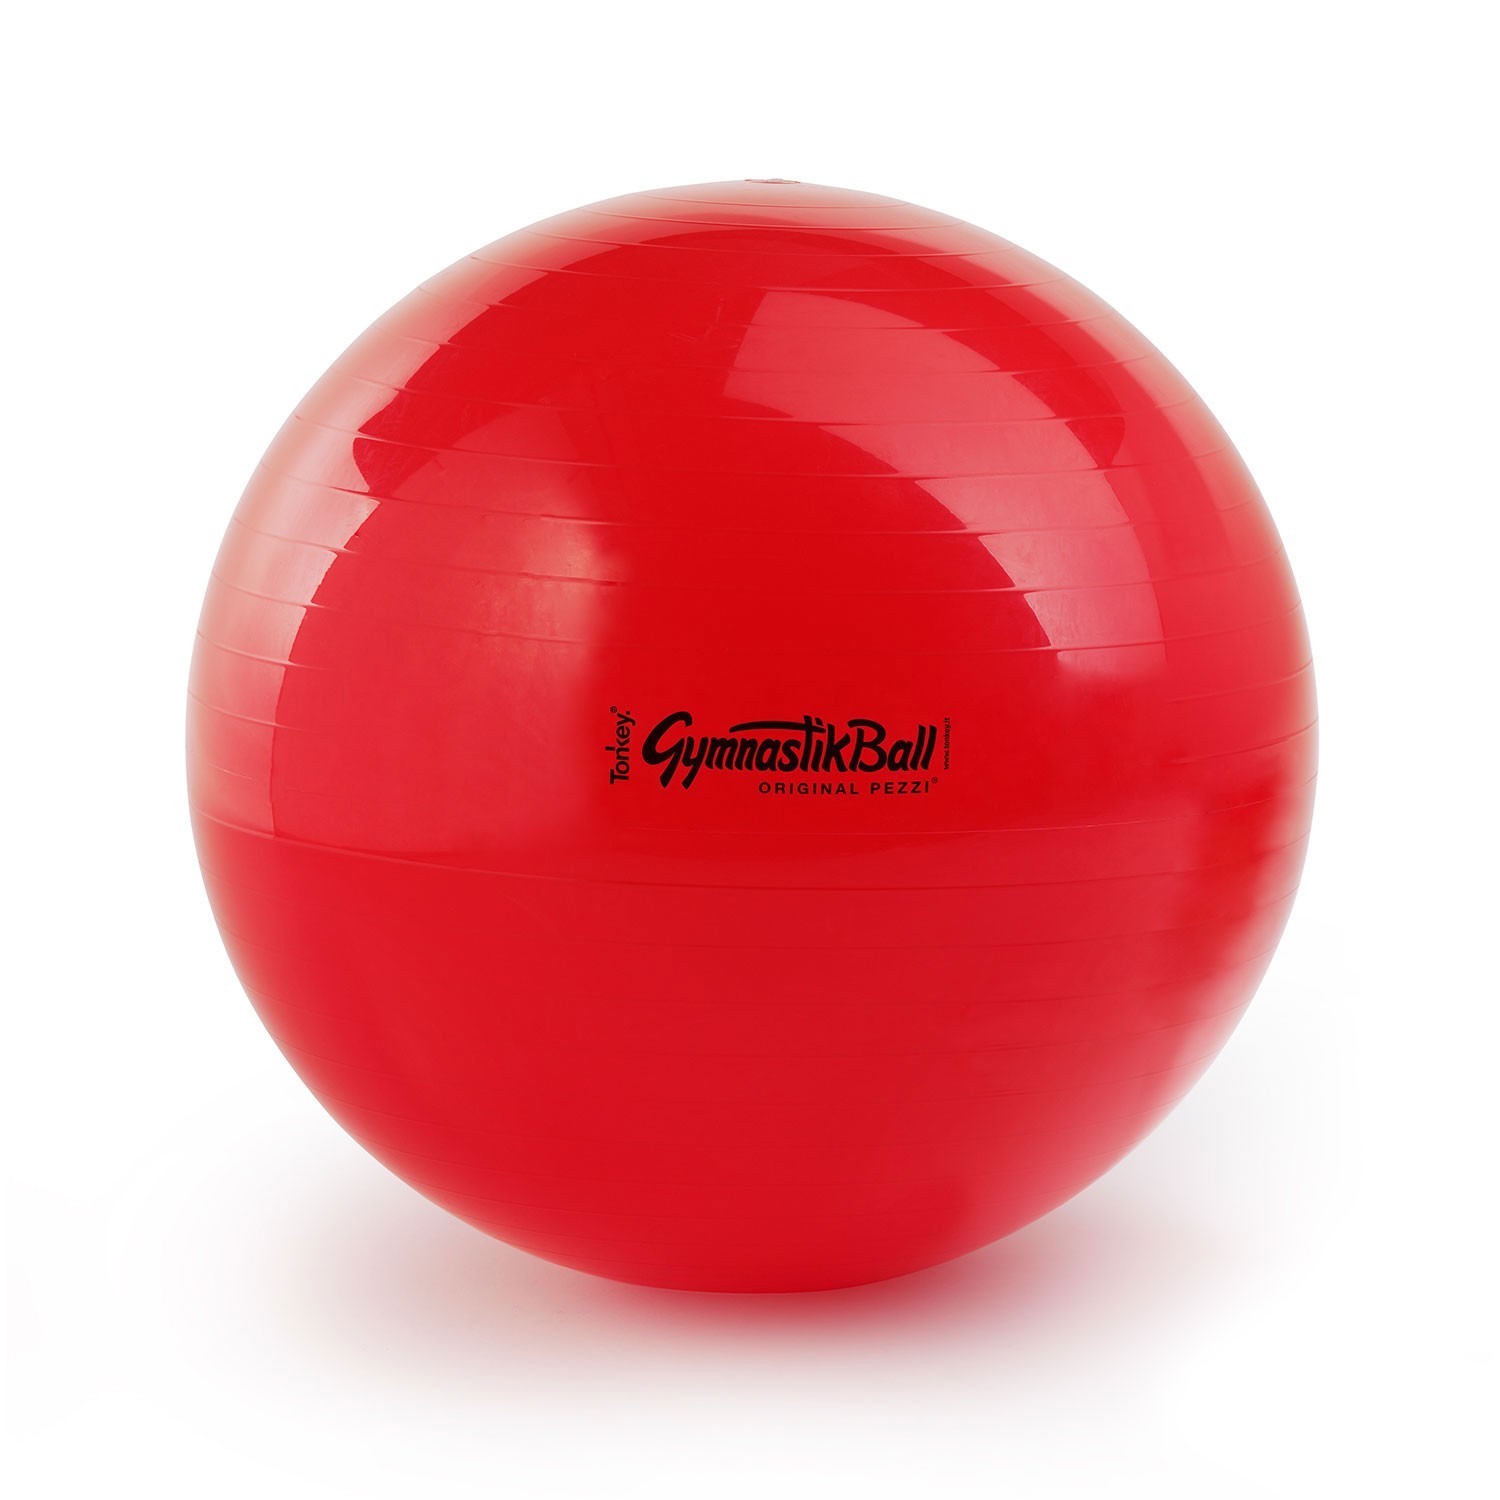 10 Original Pezzi® Gymnastikball STANDARD 75cm Ø